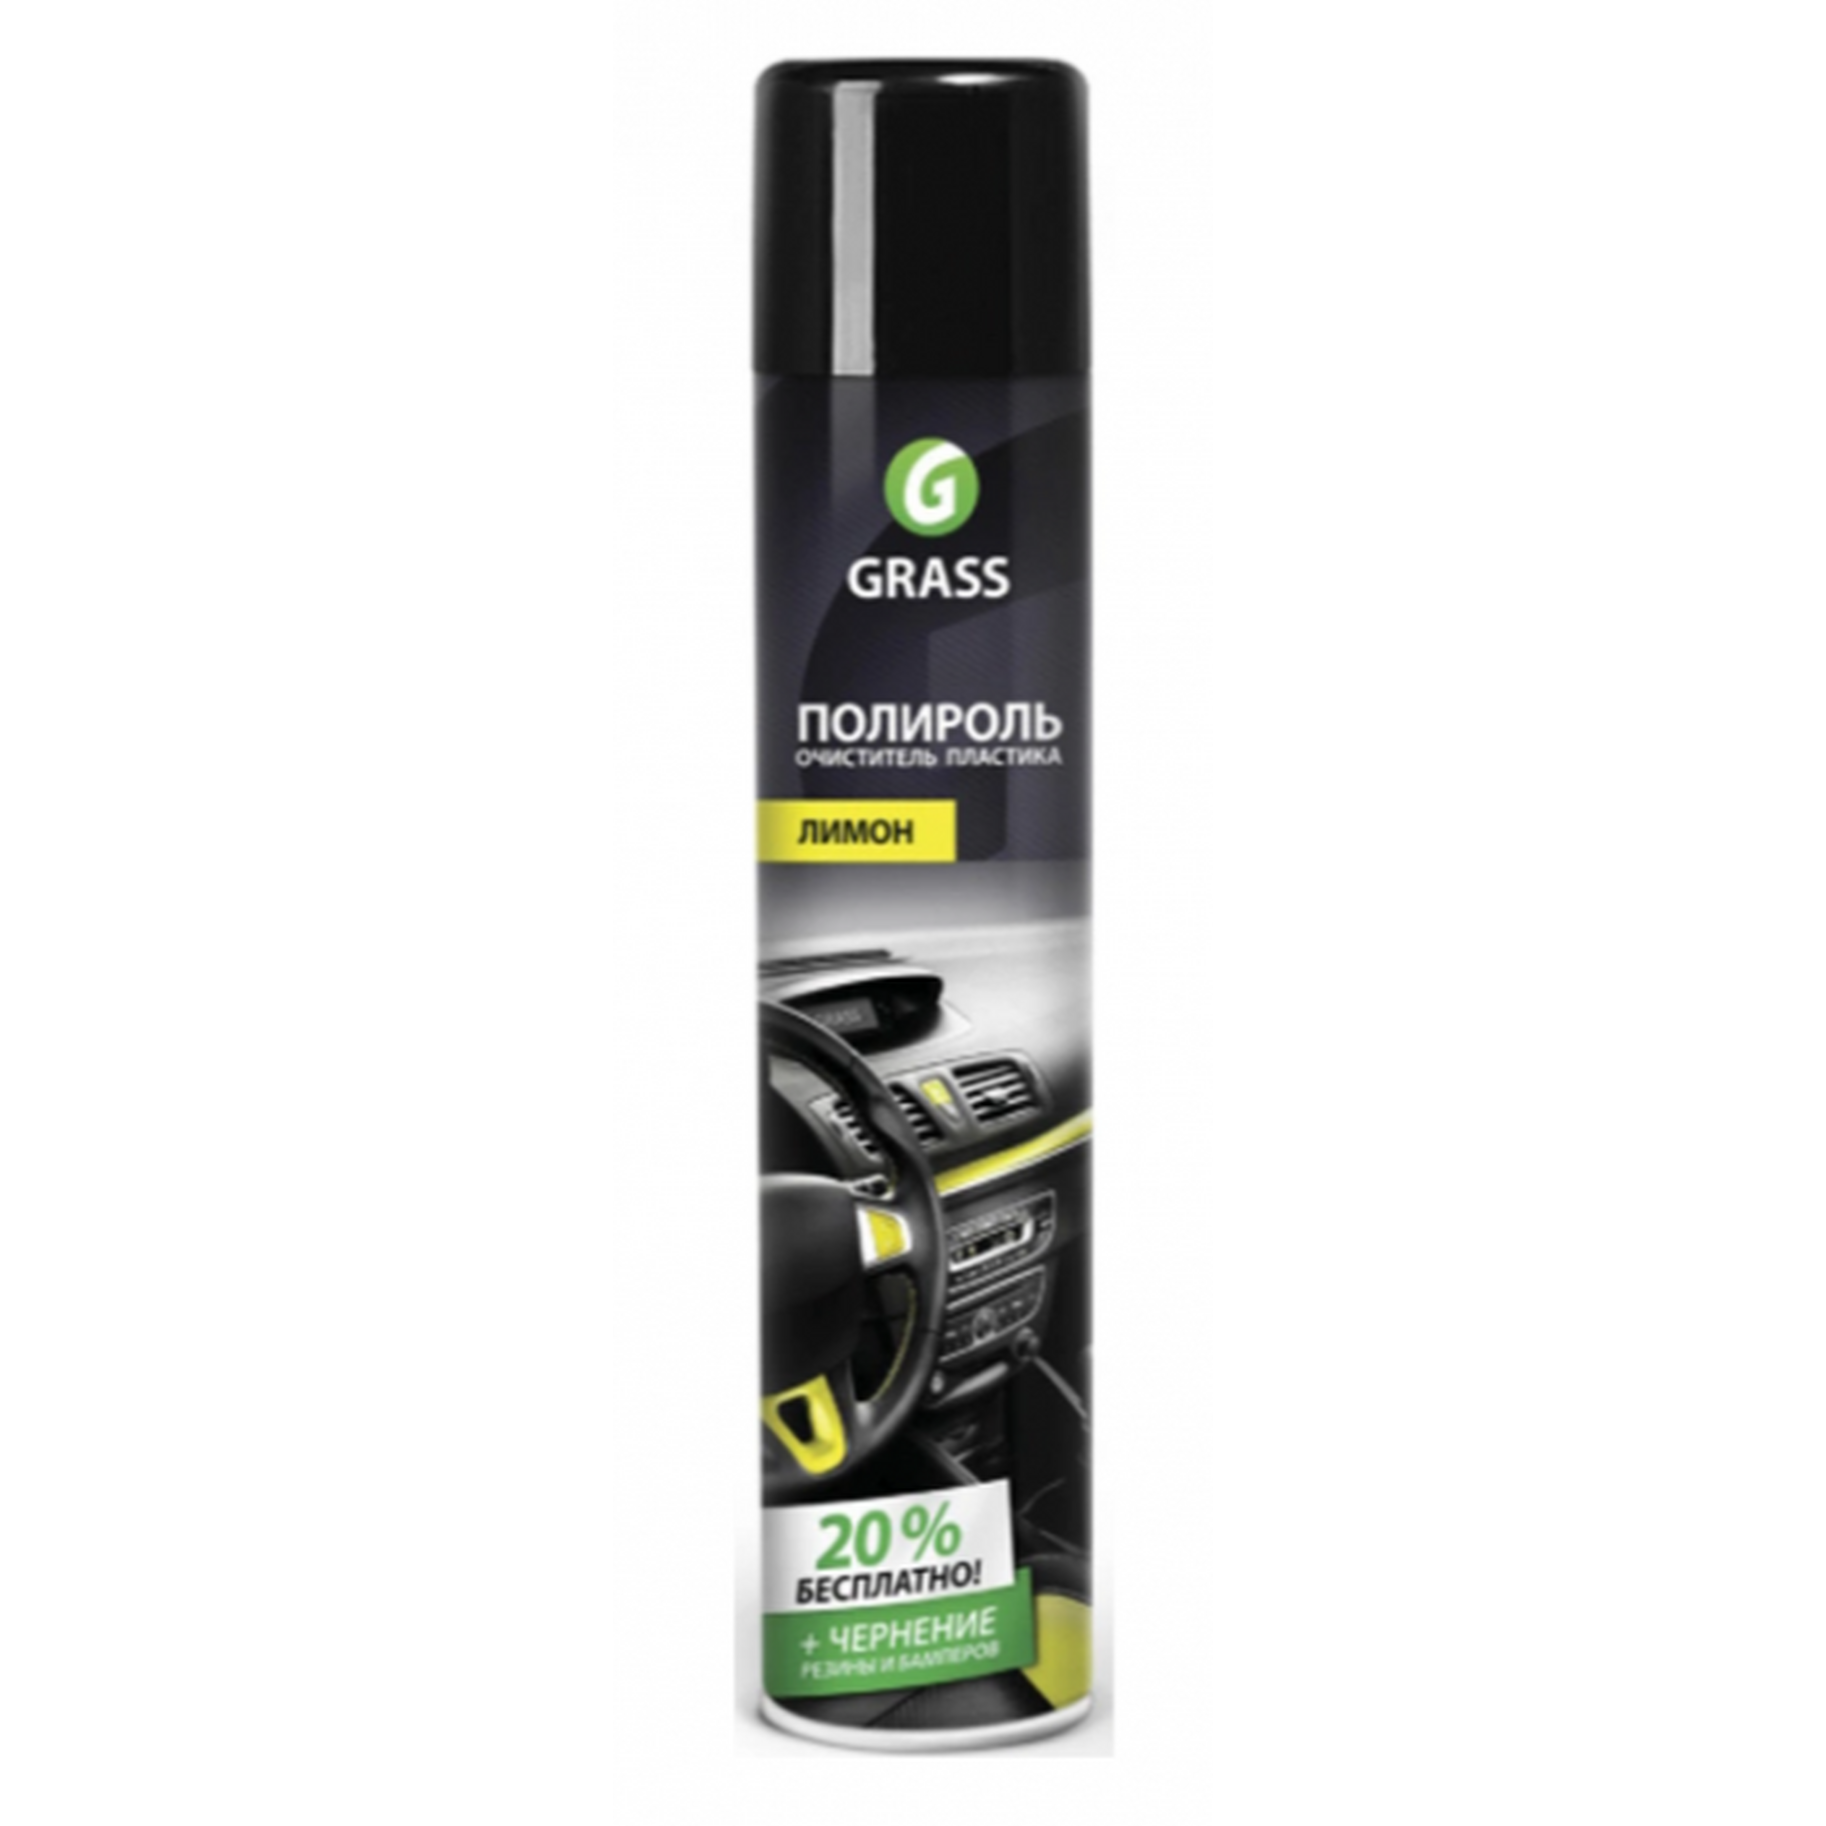 Полироль-очиститель пластика GraSS Dashboard Cleaner  ЛИМОН 750 мл 120107-1 полироль салона grass лимон антистатик 750 мл аэрозоль